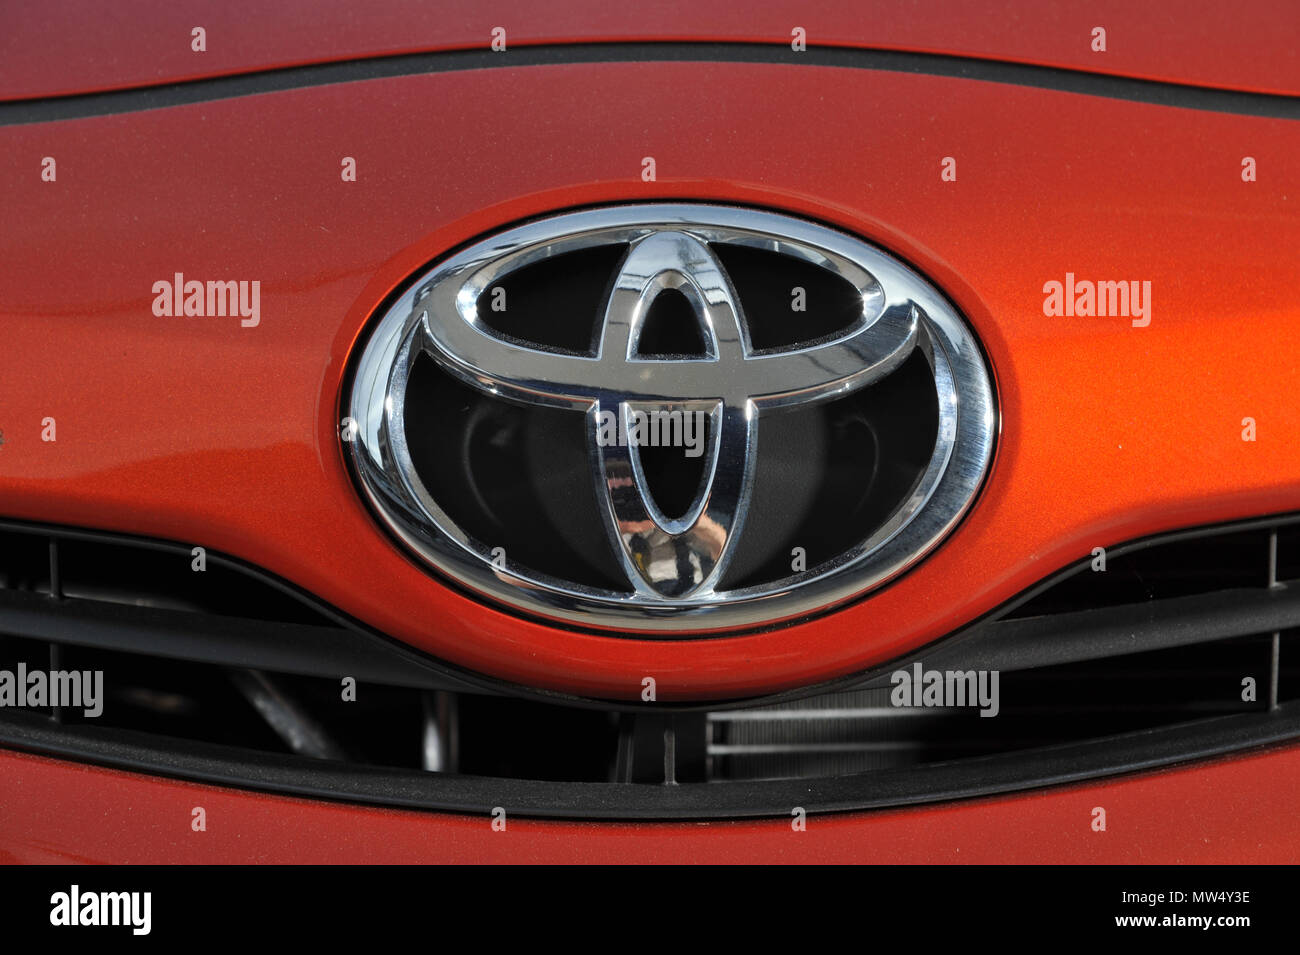 2012 Toyota Aygo compact city car Stock Photo